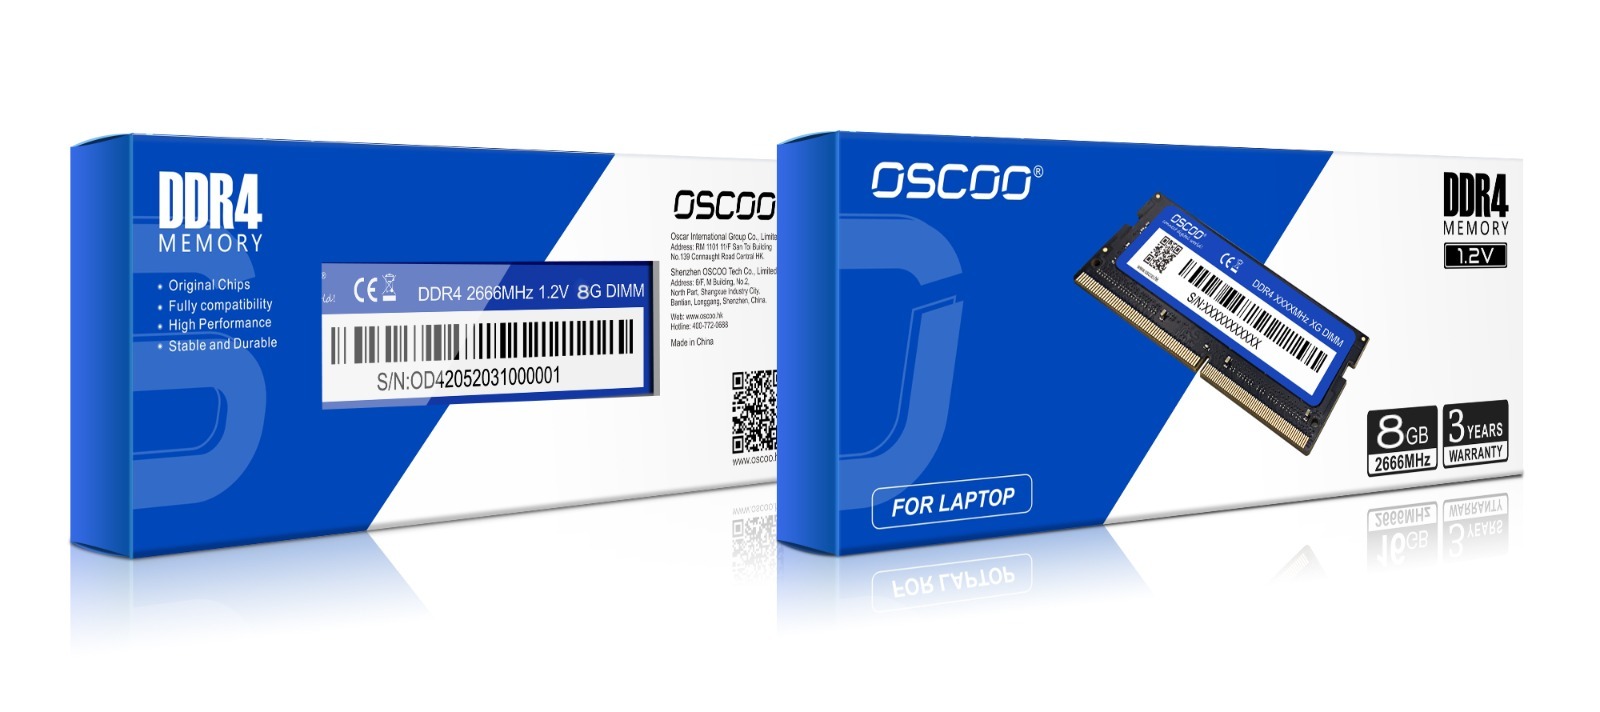 OSCOO DDR4 laptop 8GB 3200MHz